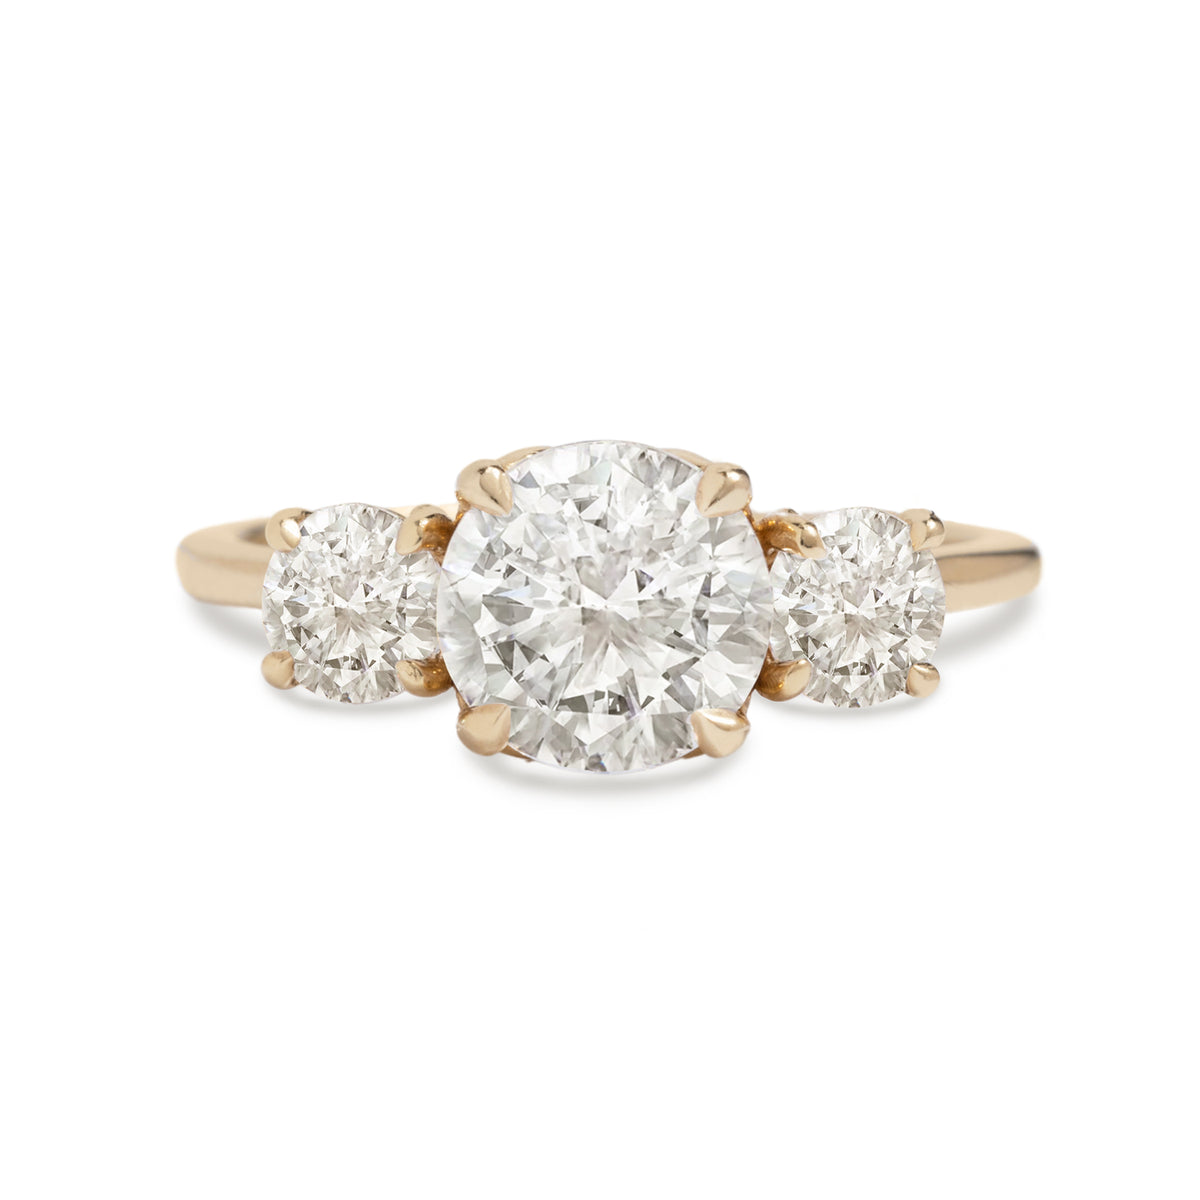 14k yellow, white, rose gold semi custom engagement ring three stone diamond ring with petal prongs